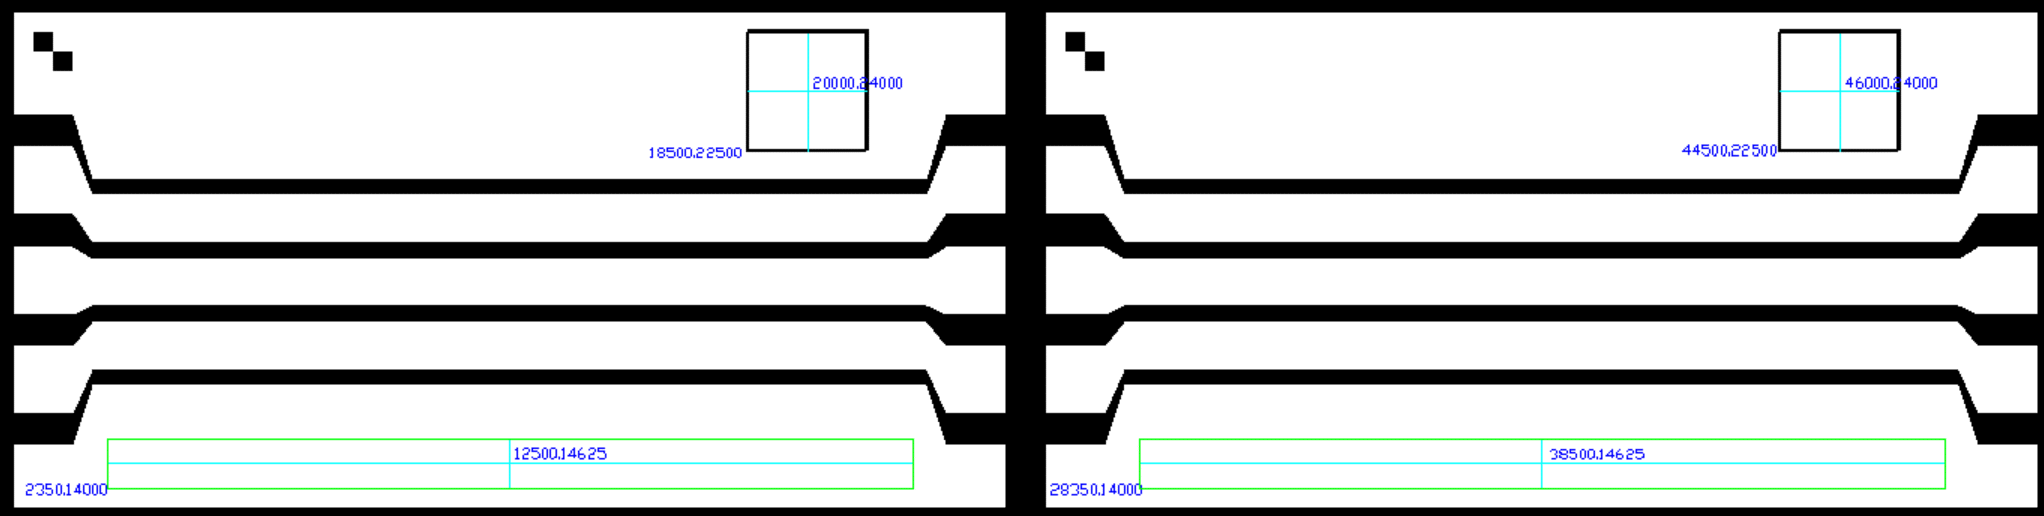 upper left circuit with box coordinates